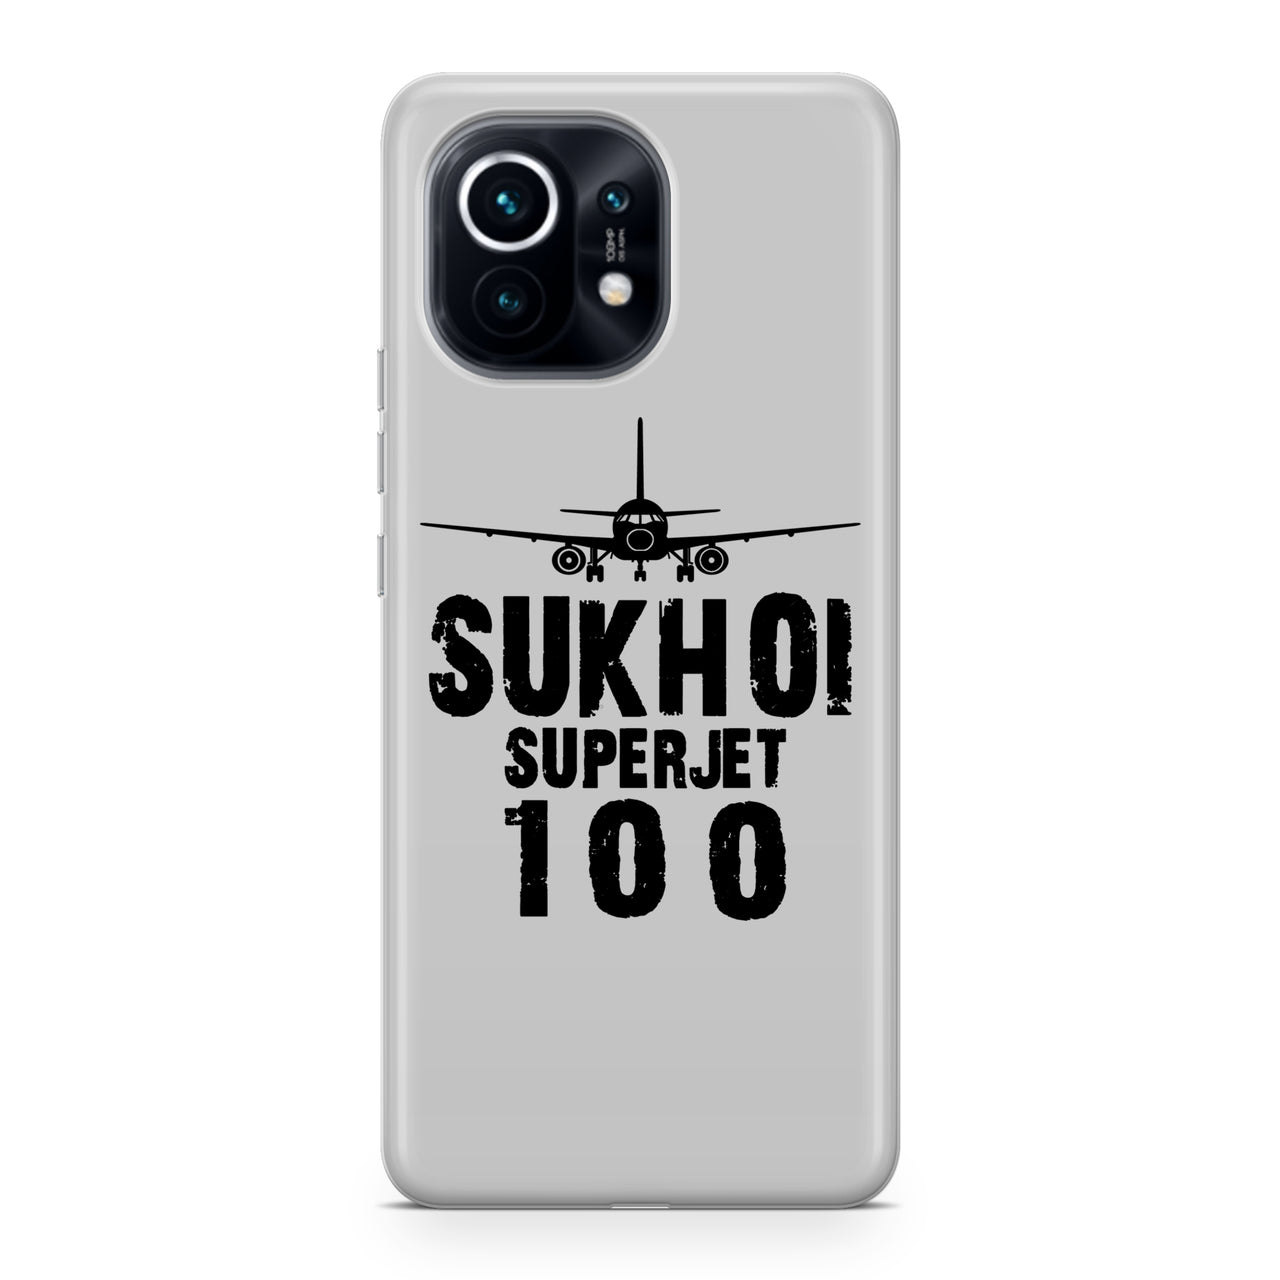 Sukhoi Superjet 100 & Plane Designed Xiaomi Cases